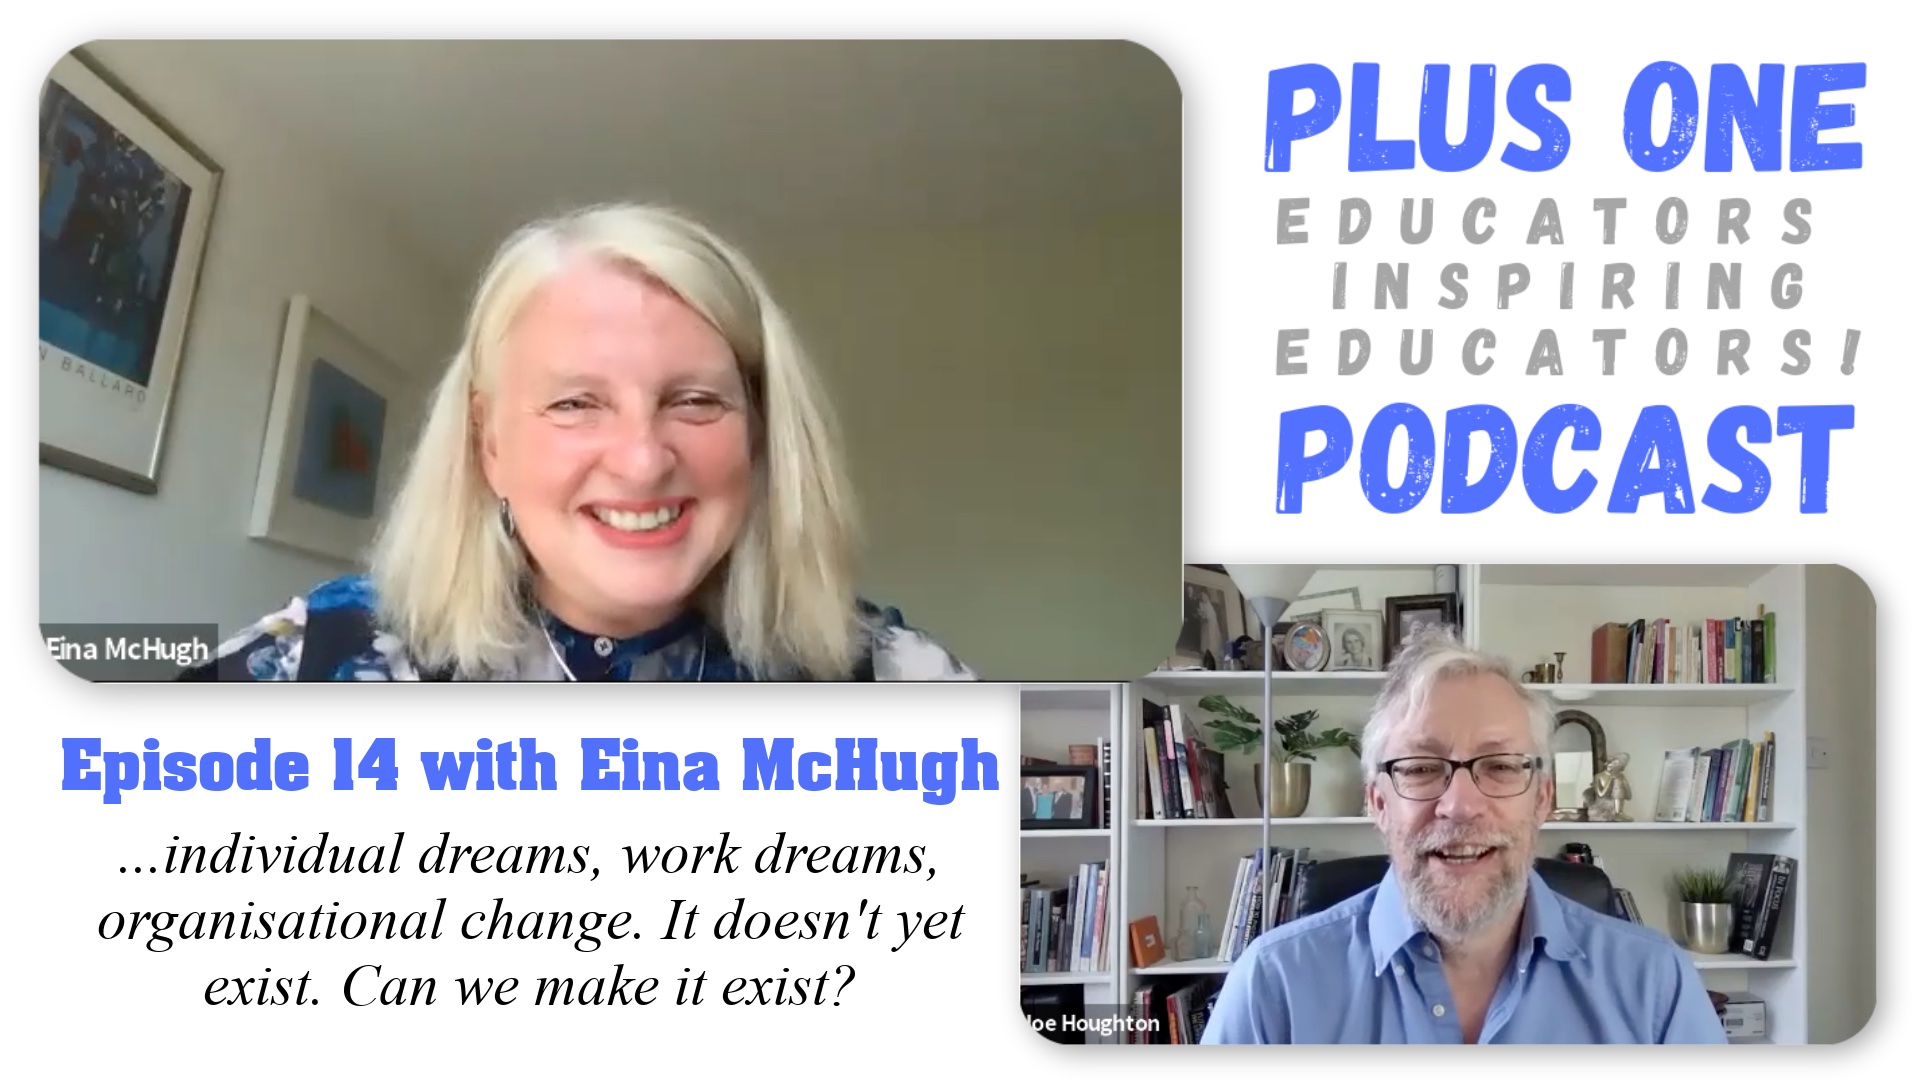 Episode 14 - Plus One podcast - Eina McHugh